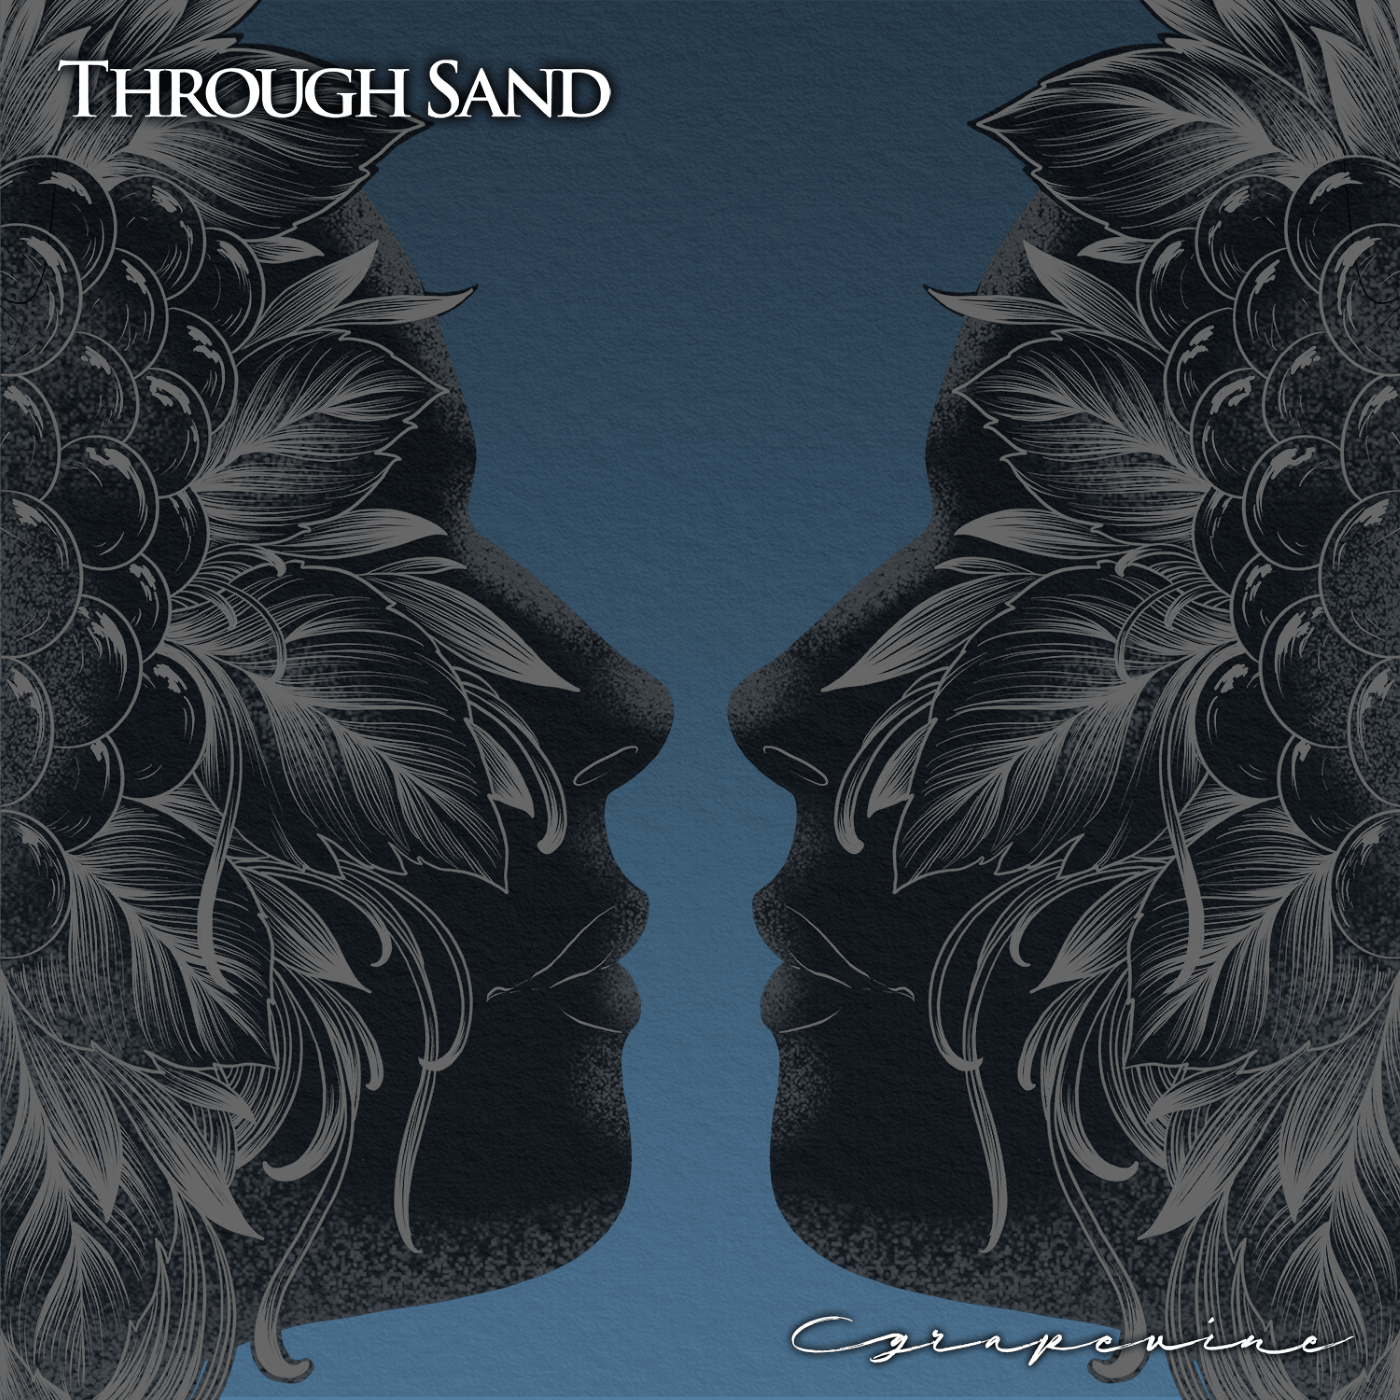 Through Sand